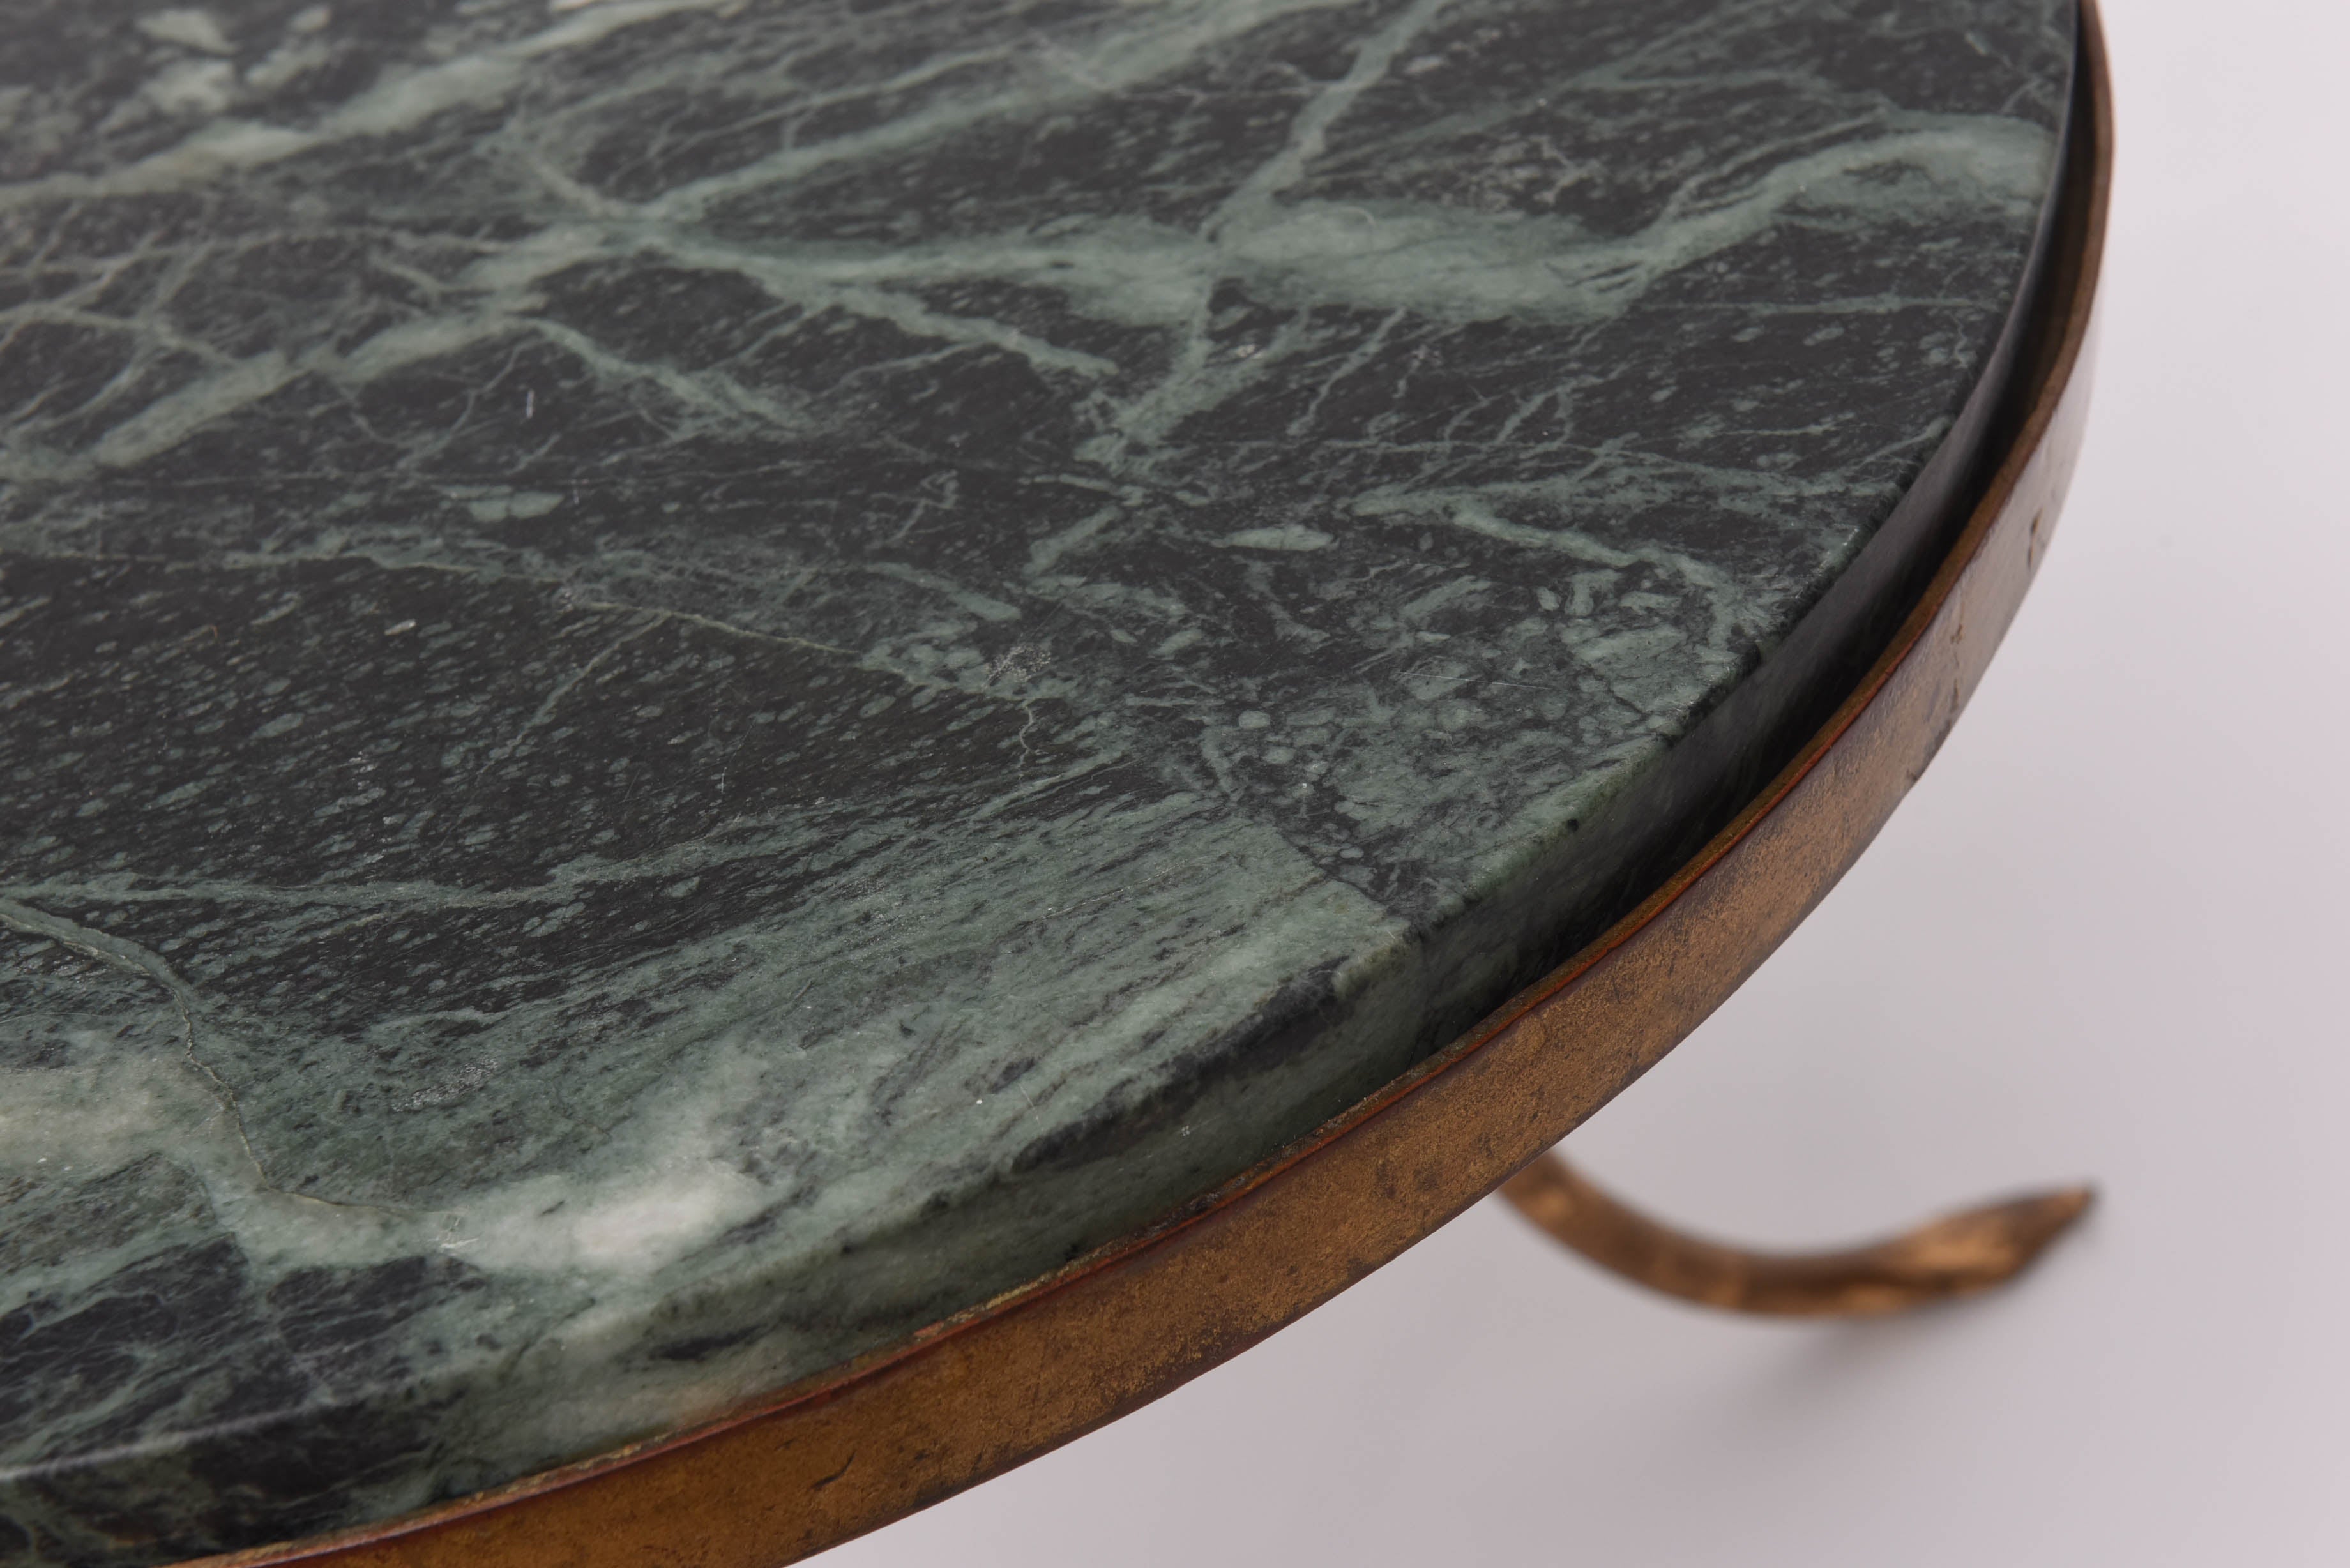 Marble-top on a gilt iron base.
The French designer René Prou style,
circa 1940.
Very elegant design.